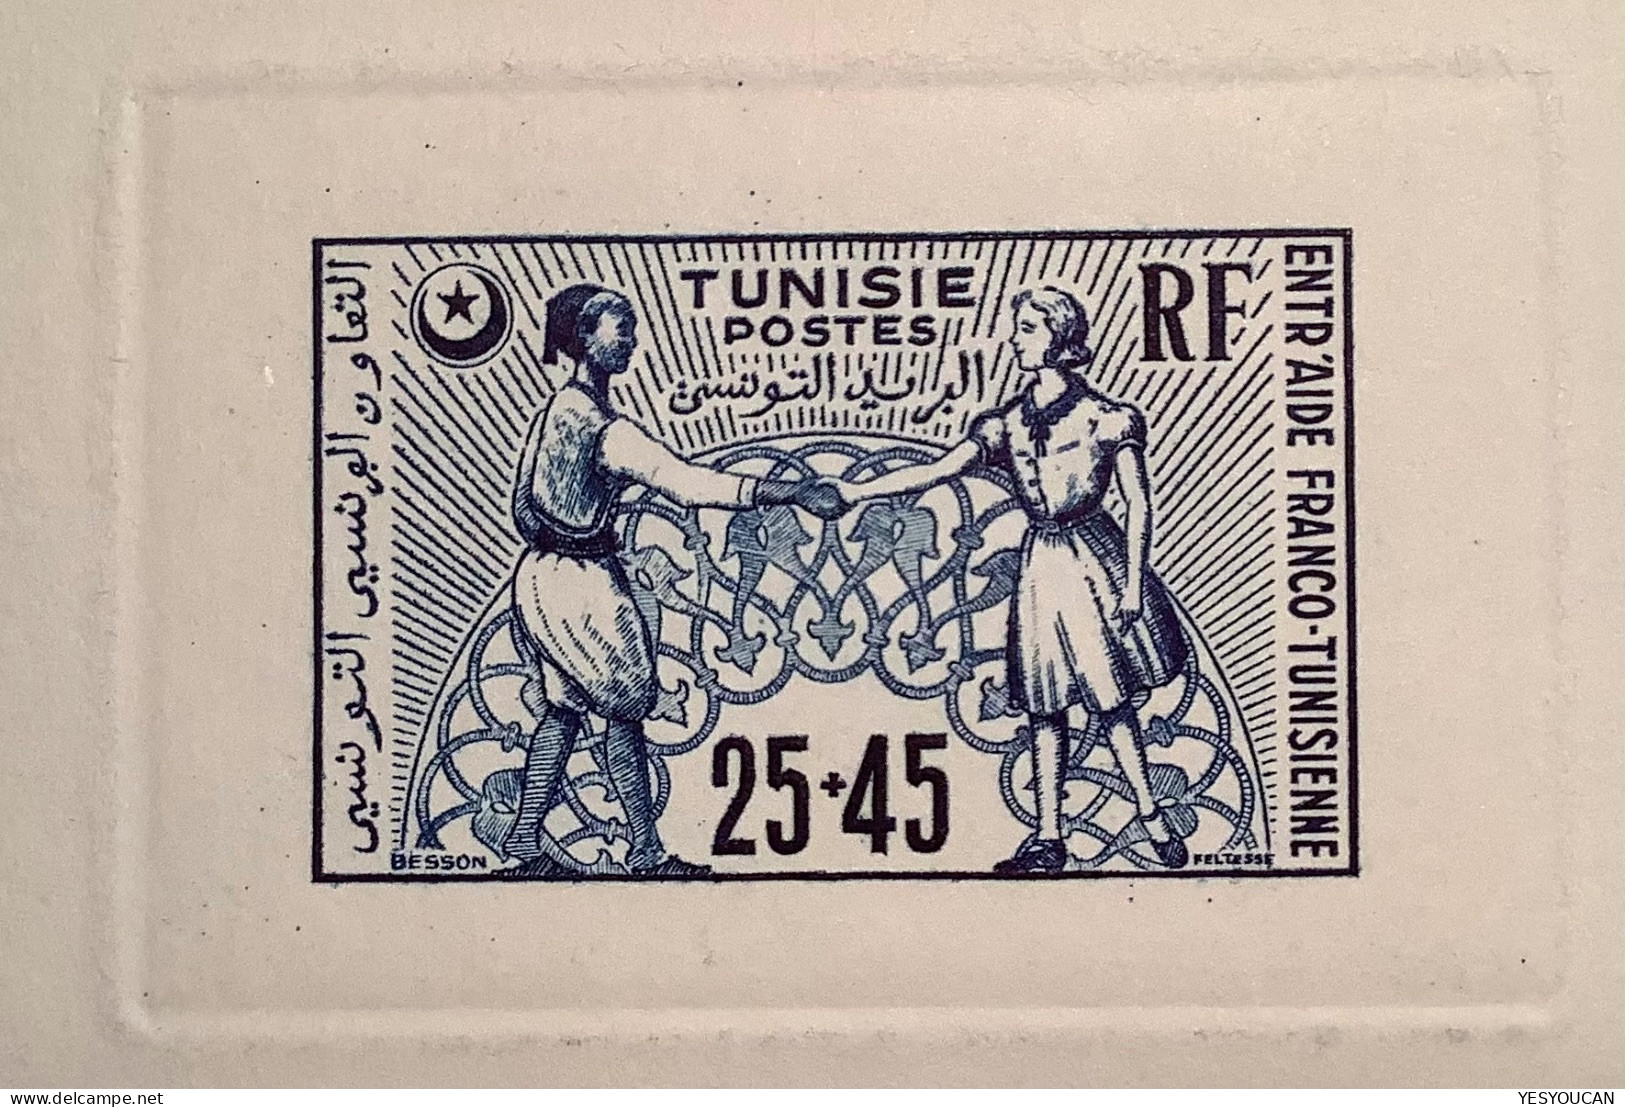 TUNISIE 1950 #336 25f+45f Fond D‘ Entraide Franco-tunisien épreuve De Luxe Rare (France Amitié - Nuovi